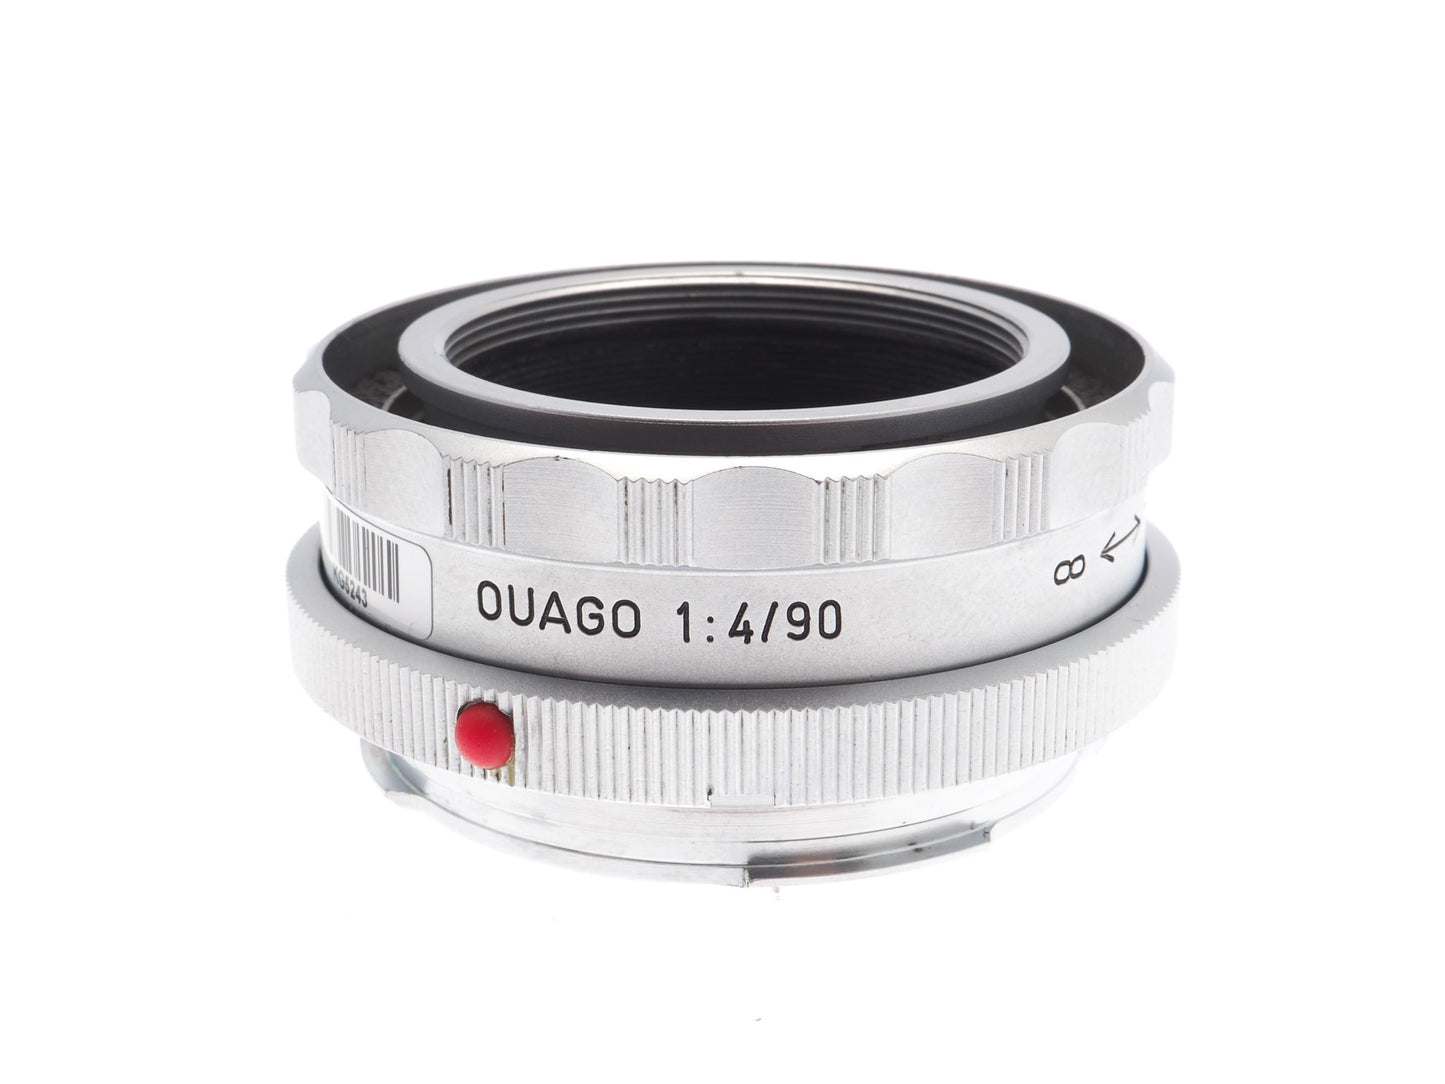 Leica Helicoid Focusing Mount OUAGO - Accessory